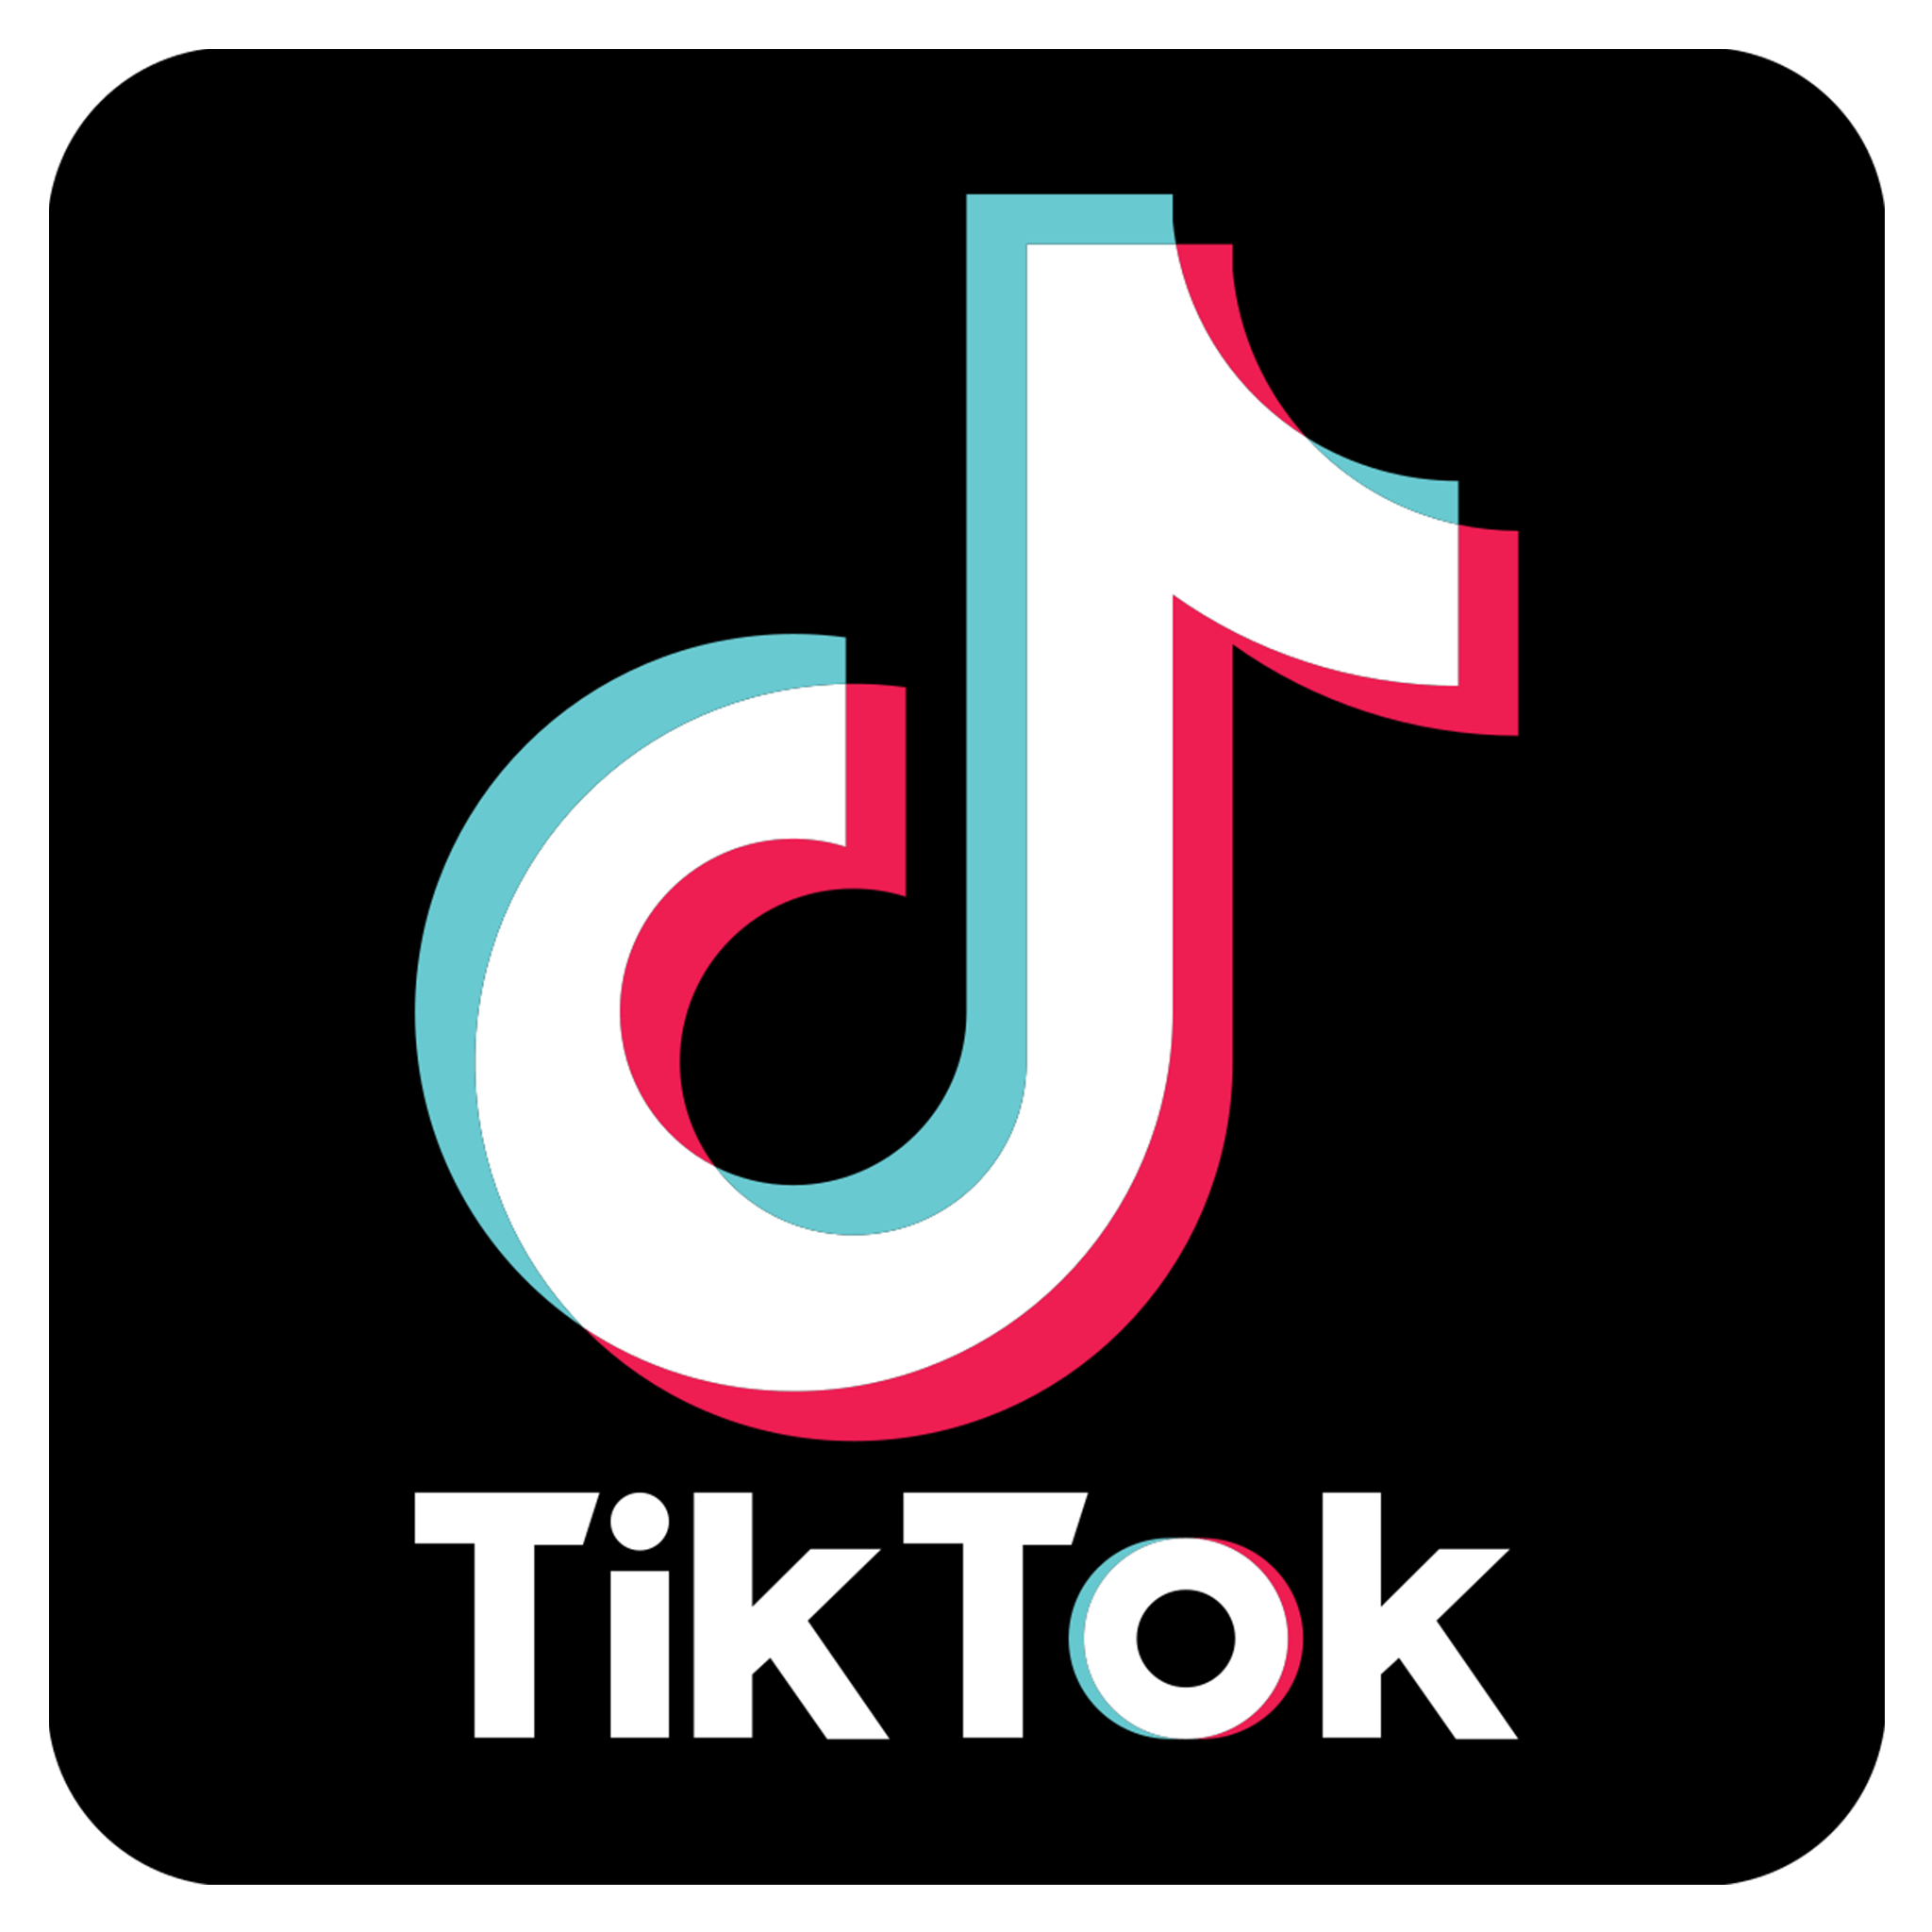 tik tok musically clipart 10 free Cliparts | Download ...
 |Tiktok Icon Png